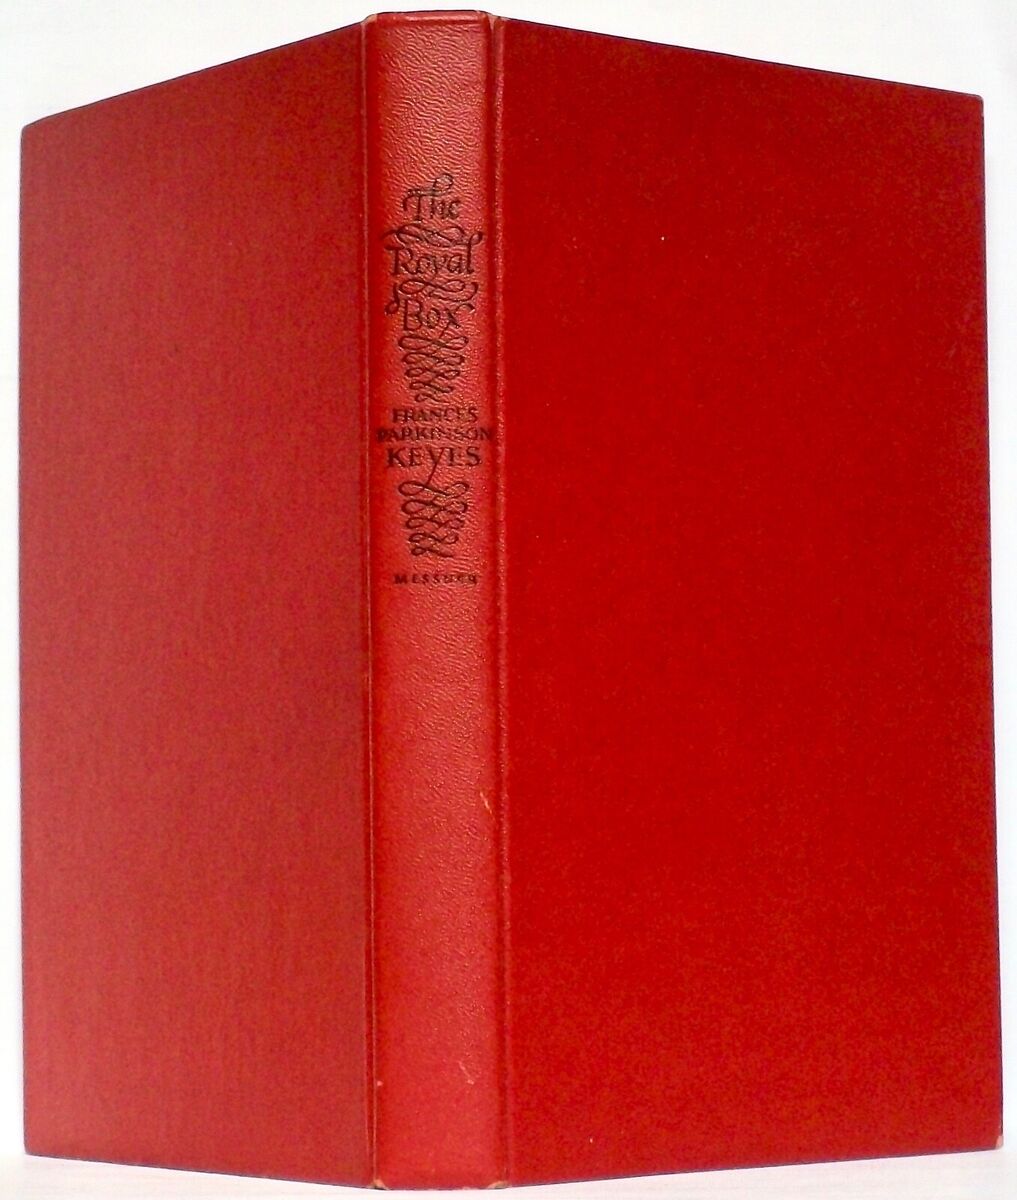 The Royal Box book by Frances Parkinson Keyes